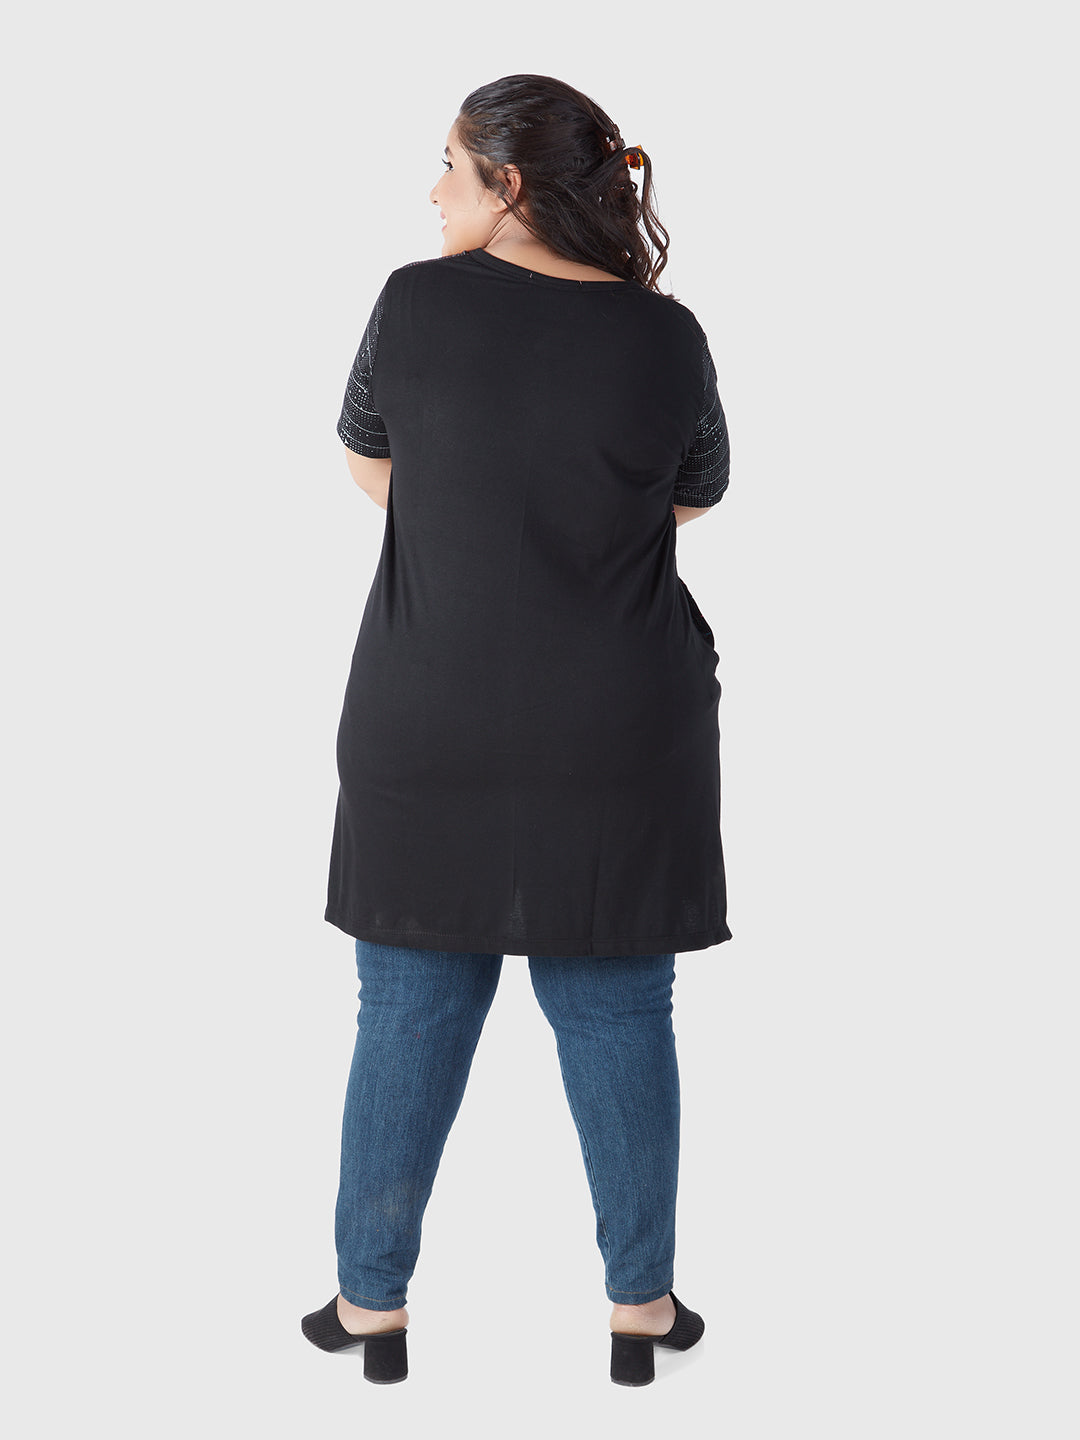 Plus Size Printed Long Tops For Women In Half Sleeves - Black